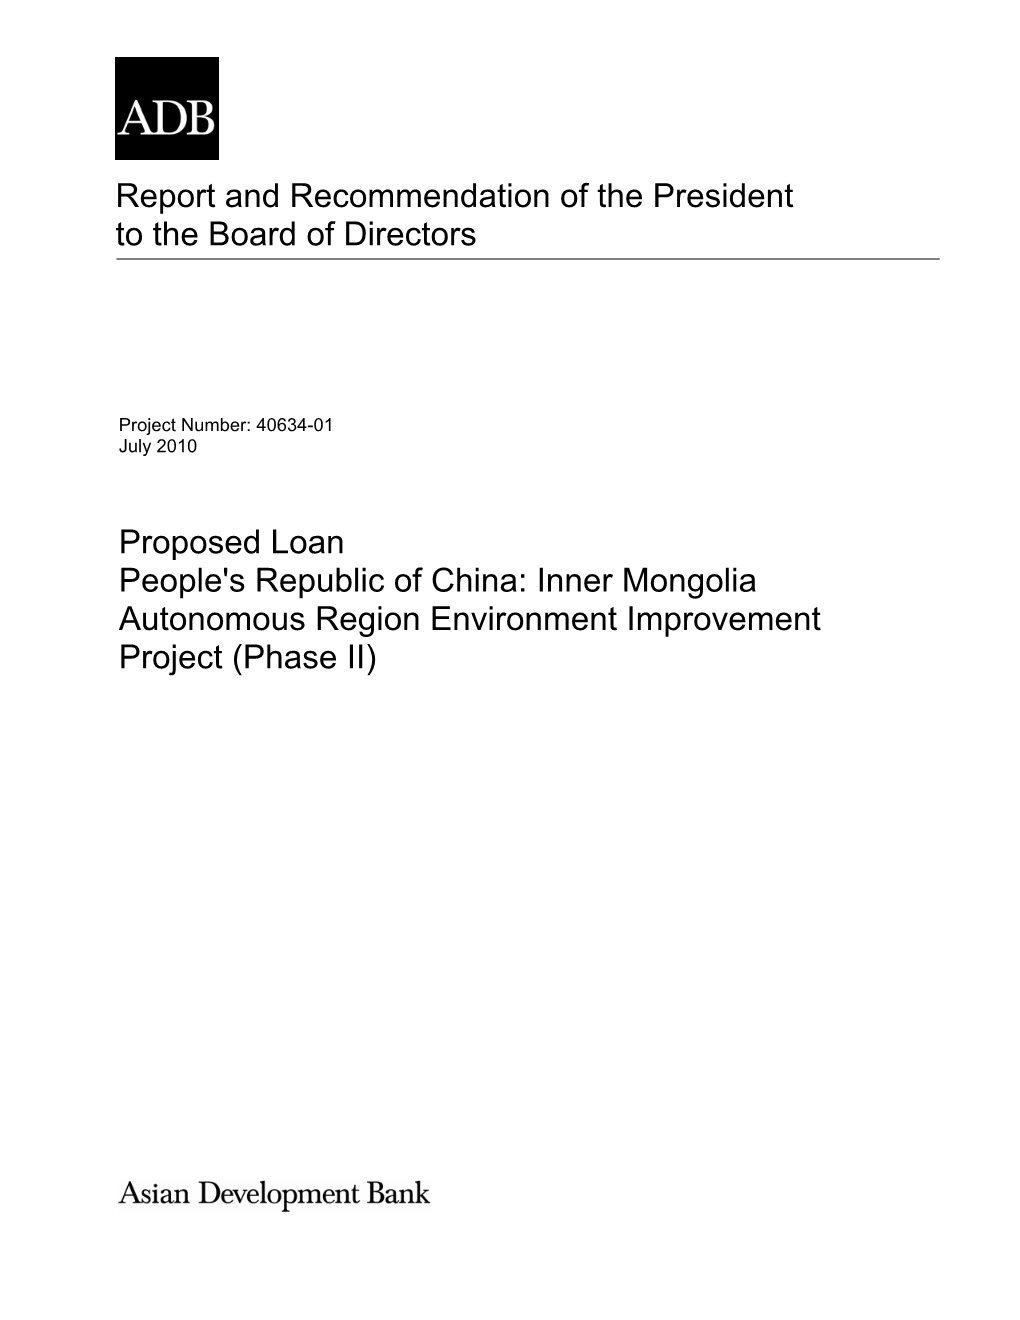 Inner Mongolia Autonomous Region Environment Improvement Project (Phase II)